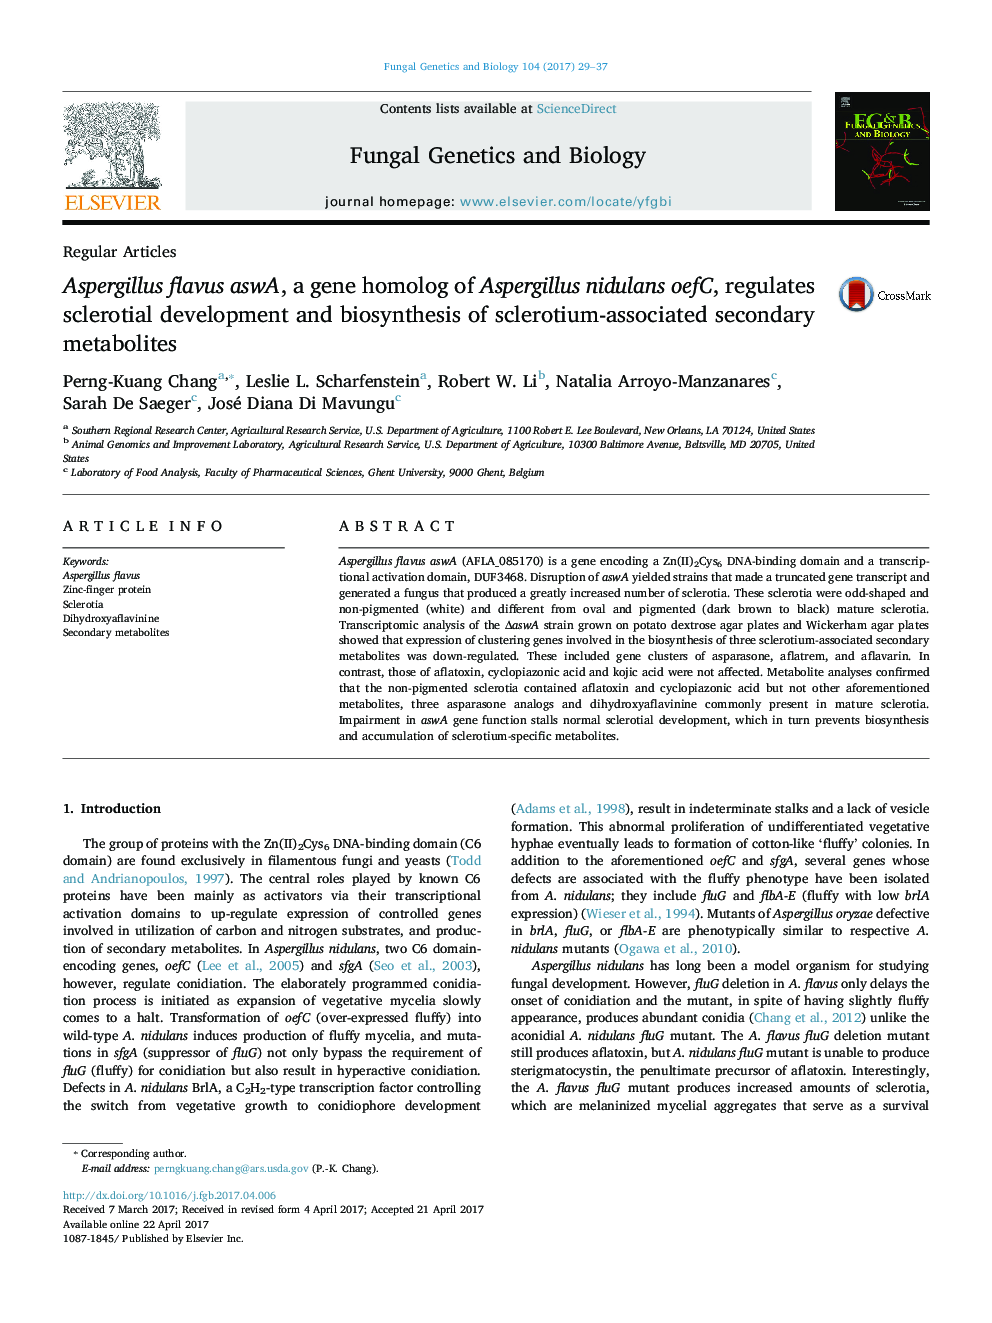 Regular ArticlesAspergillus flavus aswA, a gene homolog of Aspergillus nidulans oefC, regulates sclerotial development and biosynthesis of sclerotium-associated secondary metabolites